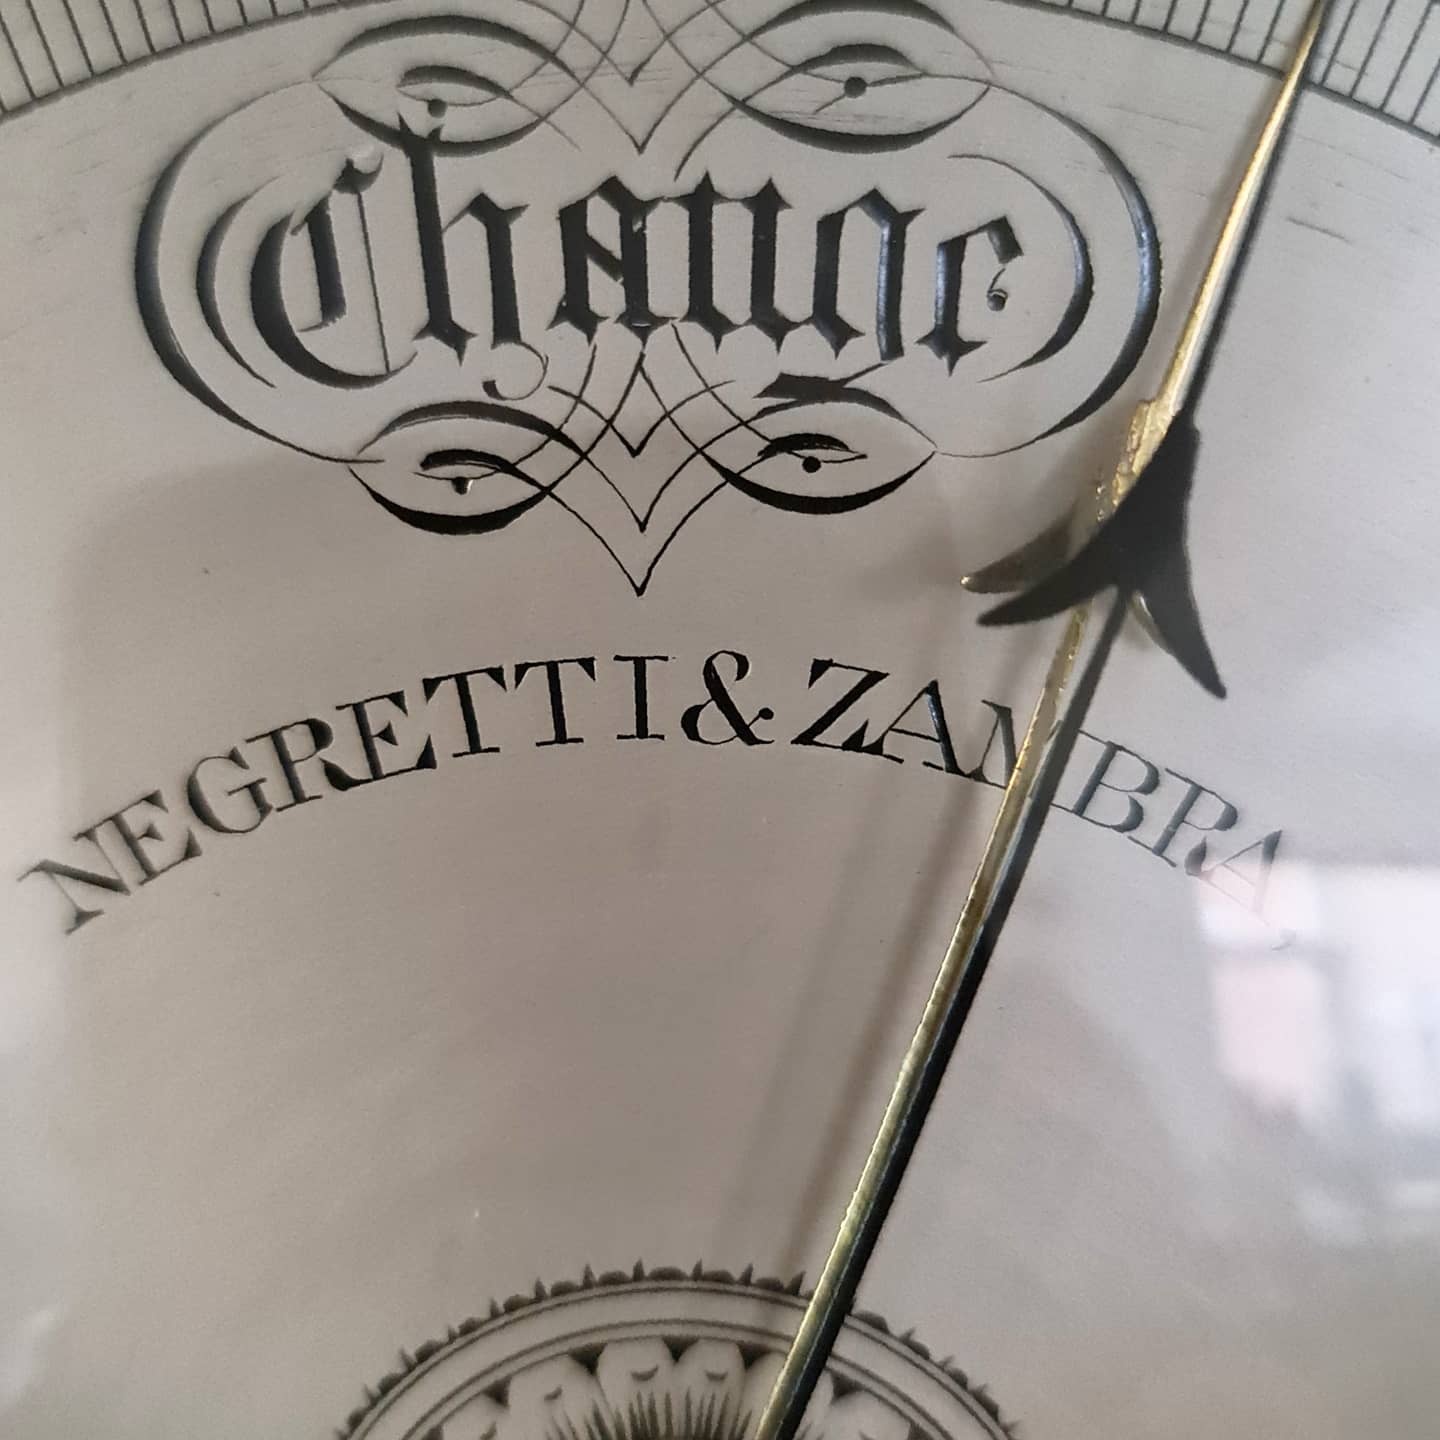 Negretti-Barometer case detail